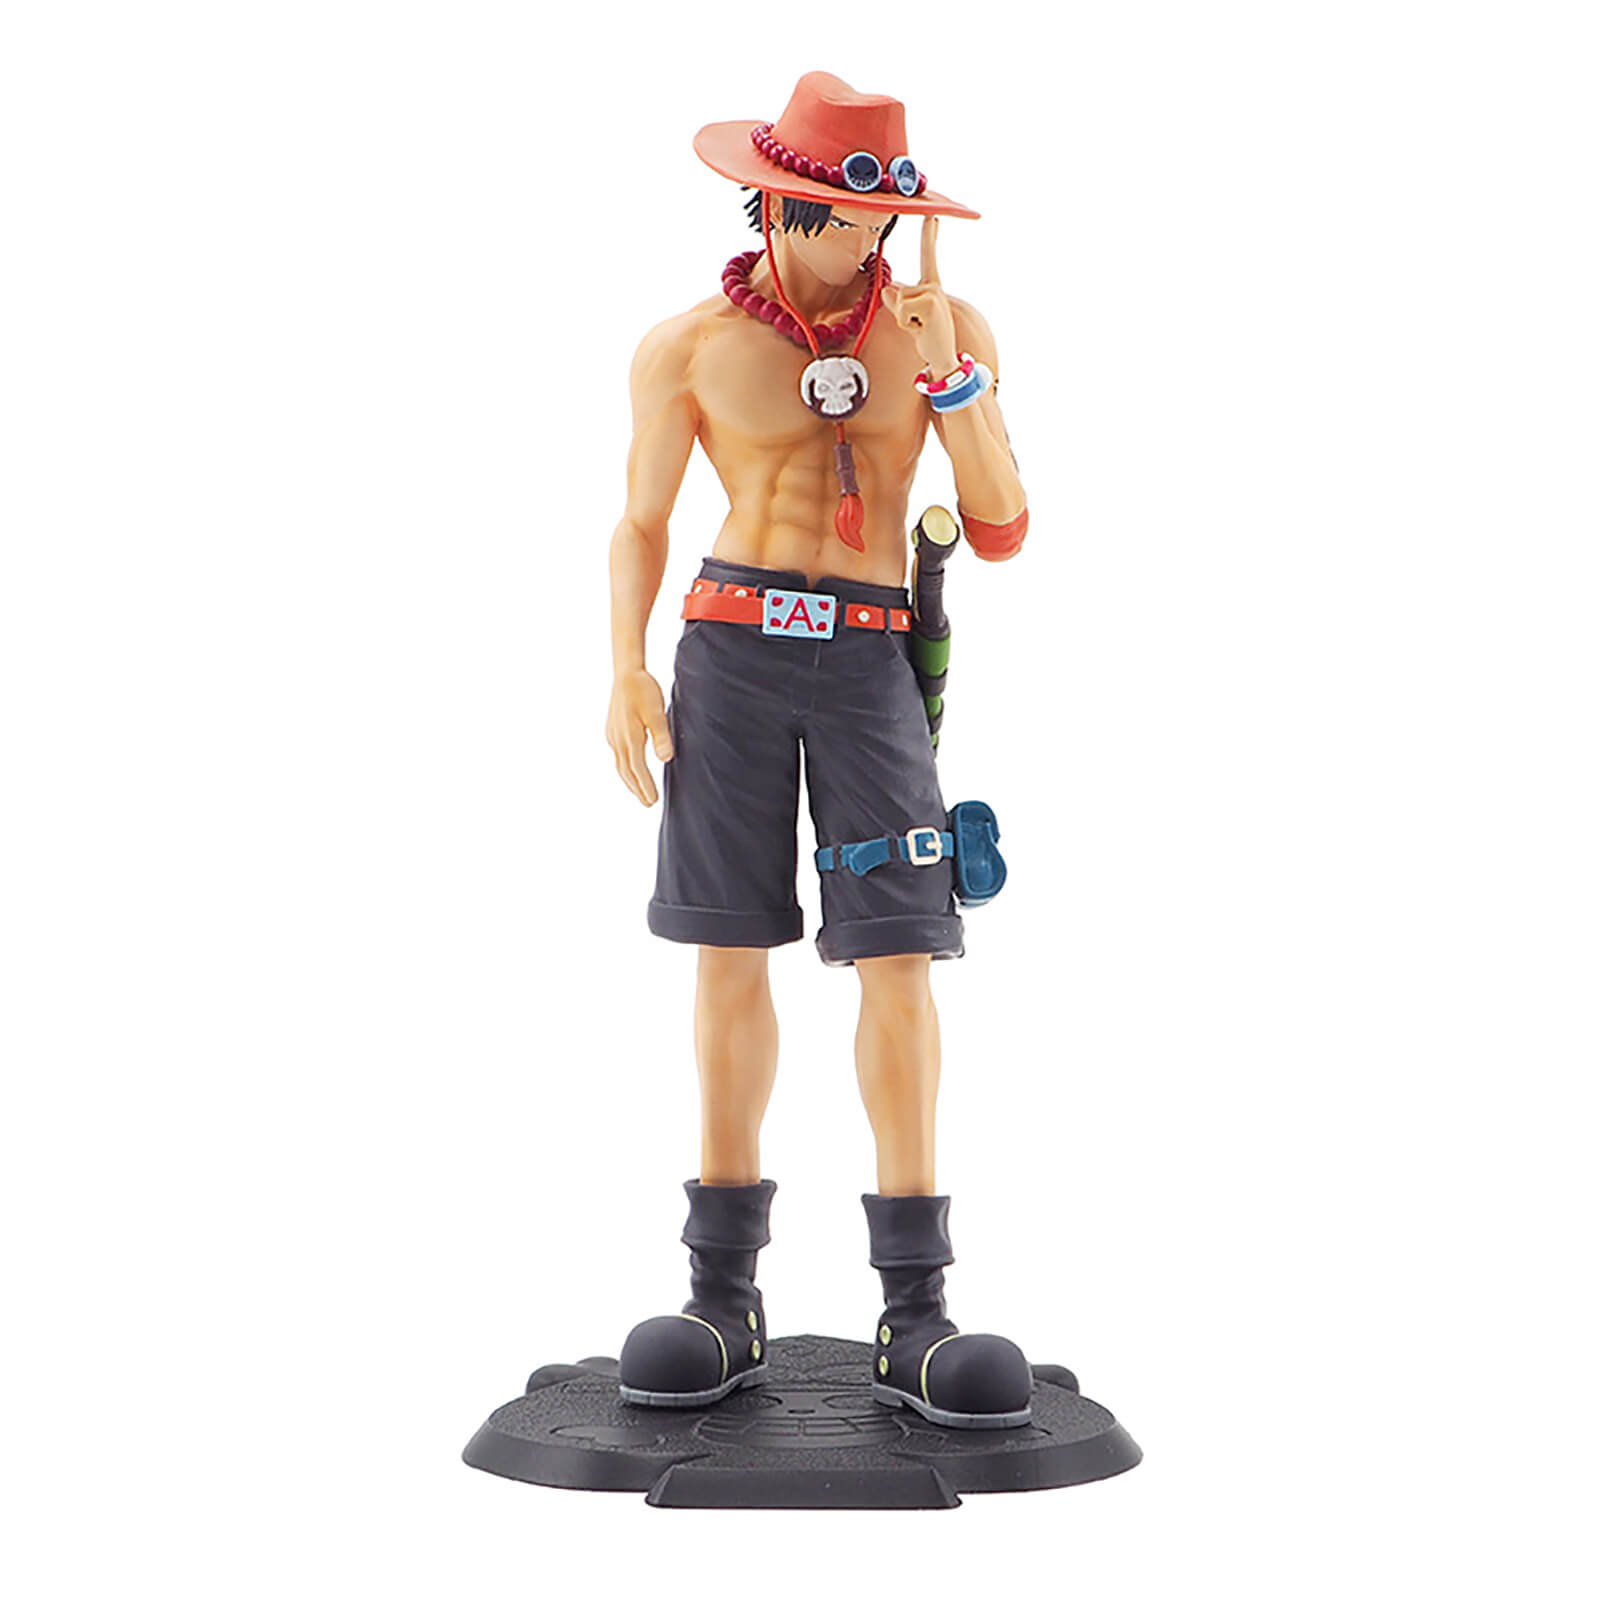 One Piece Portgas D. Ace Figurine product